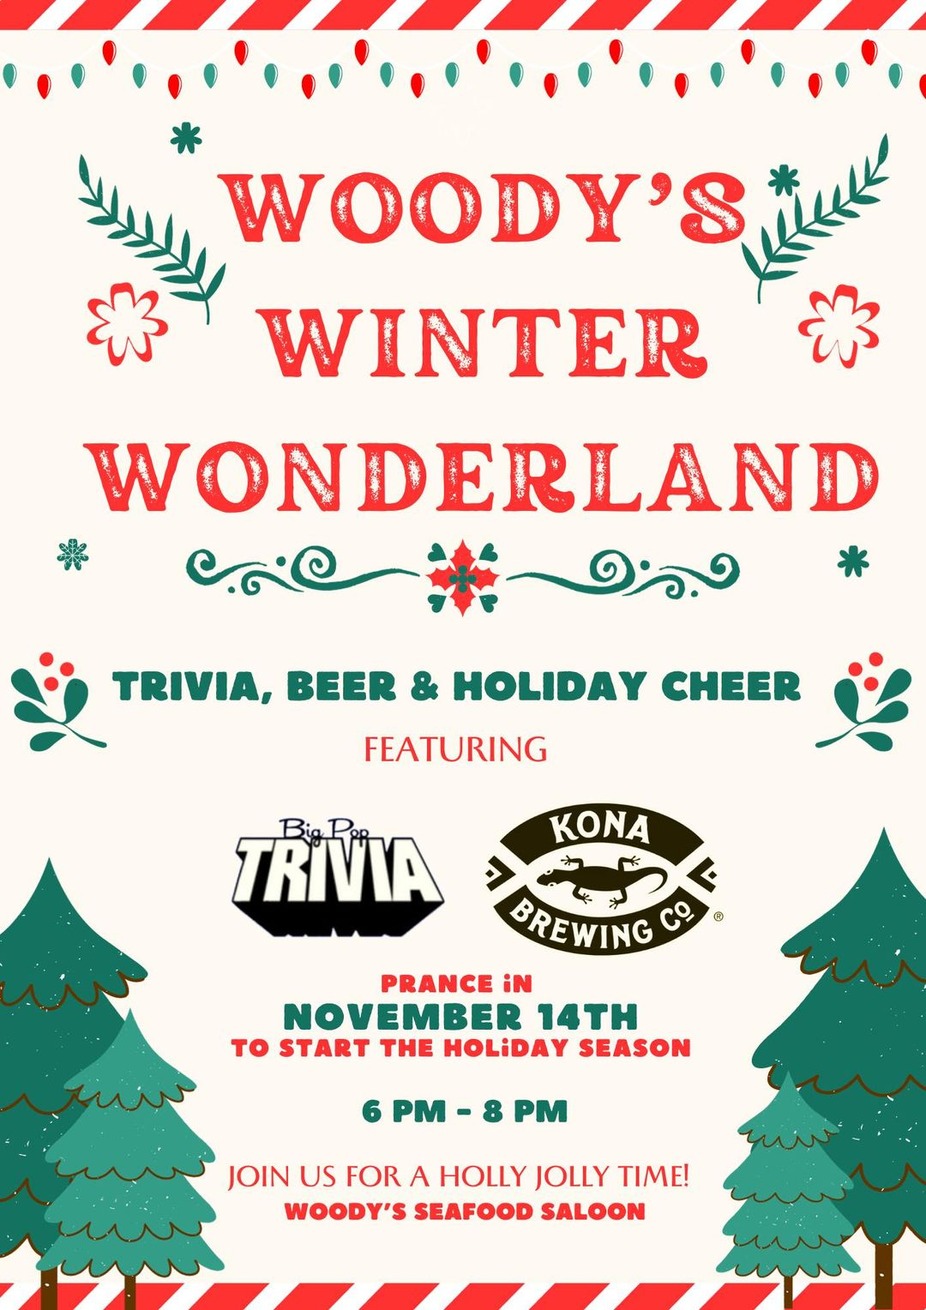 Woody's Winter Wonderland event photo